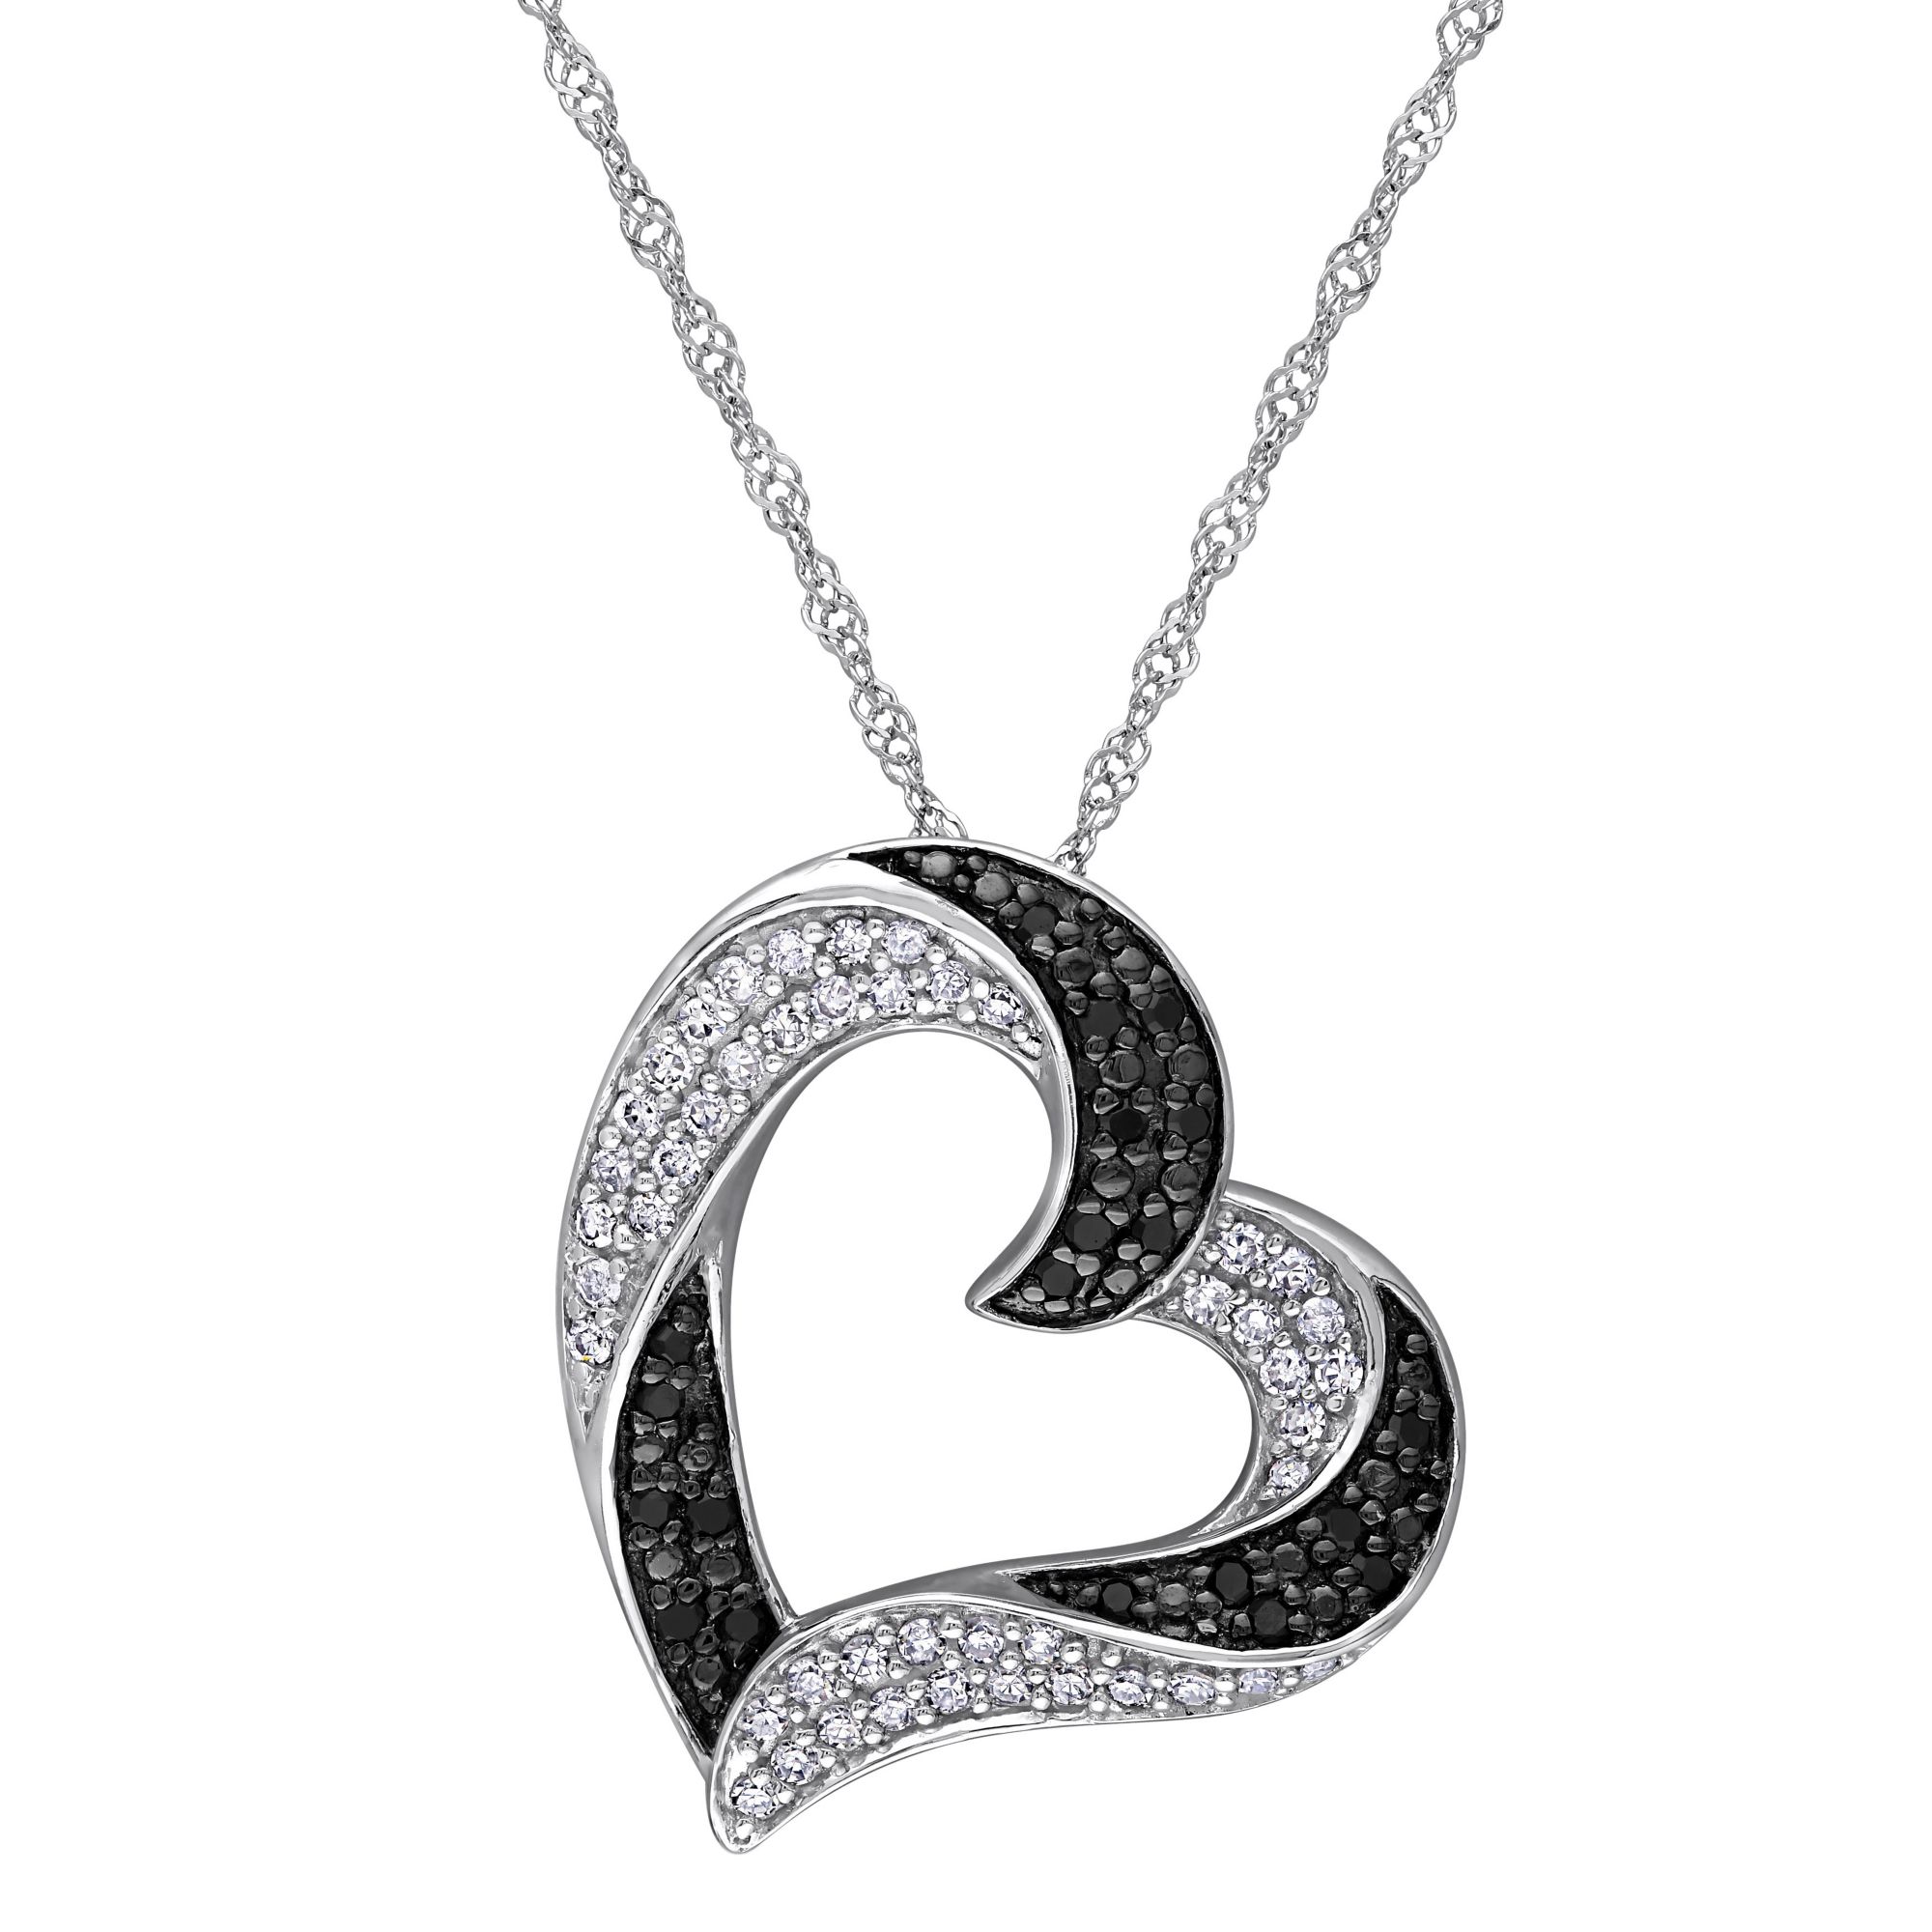 Diamond Heart Necklace 1 ct tw 10K White Gold 18